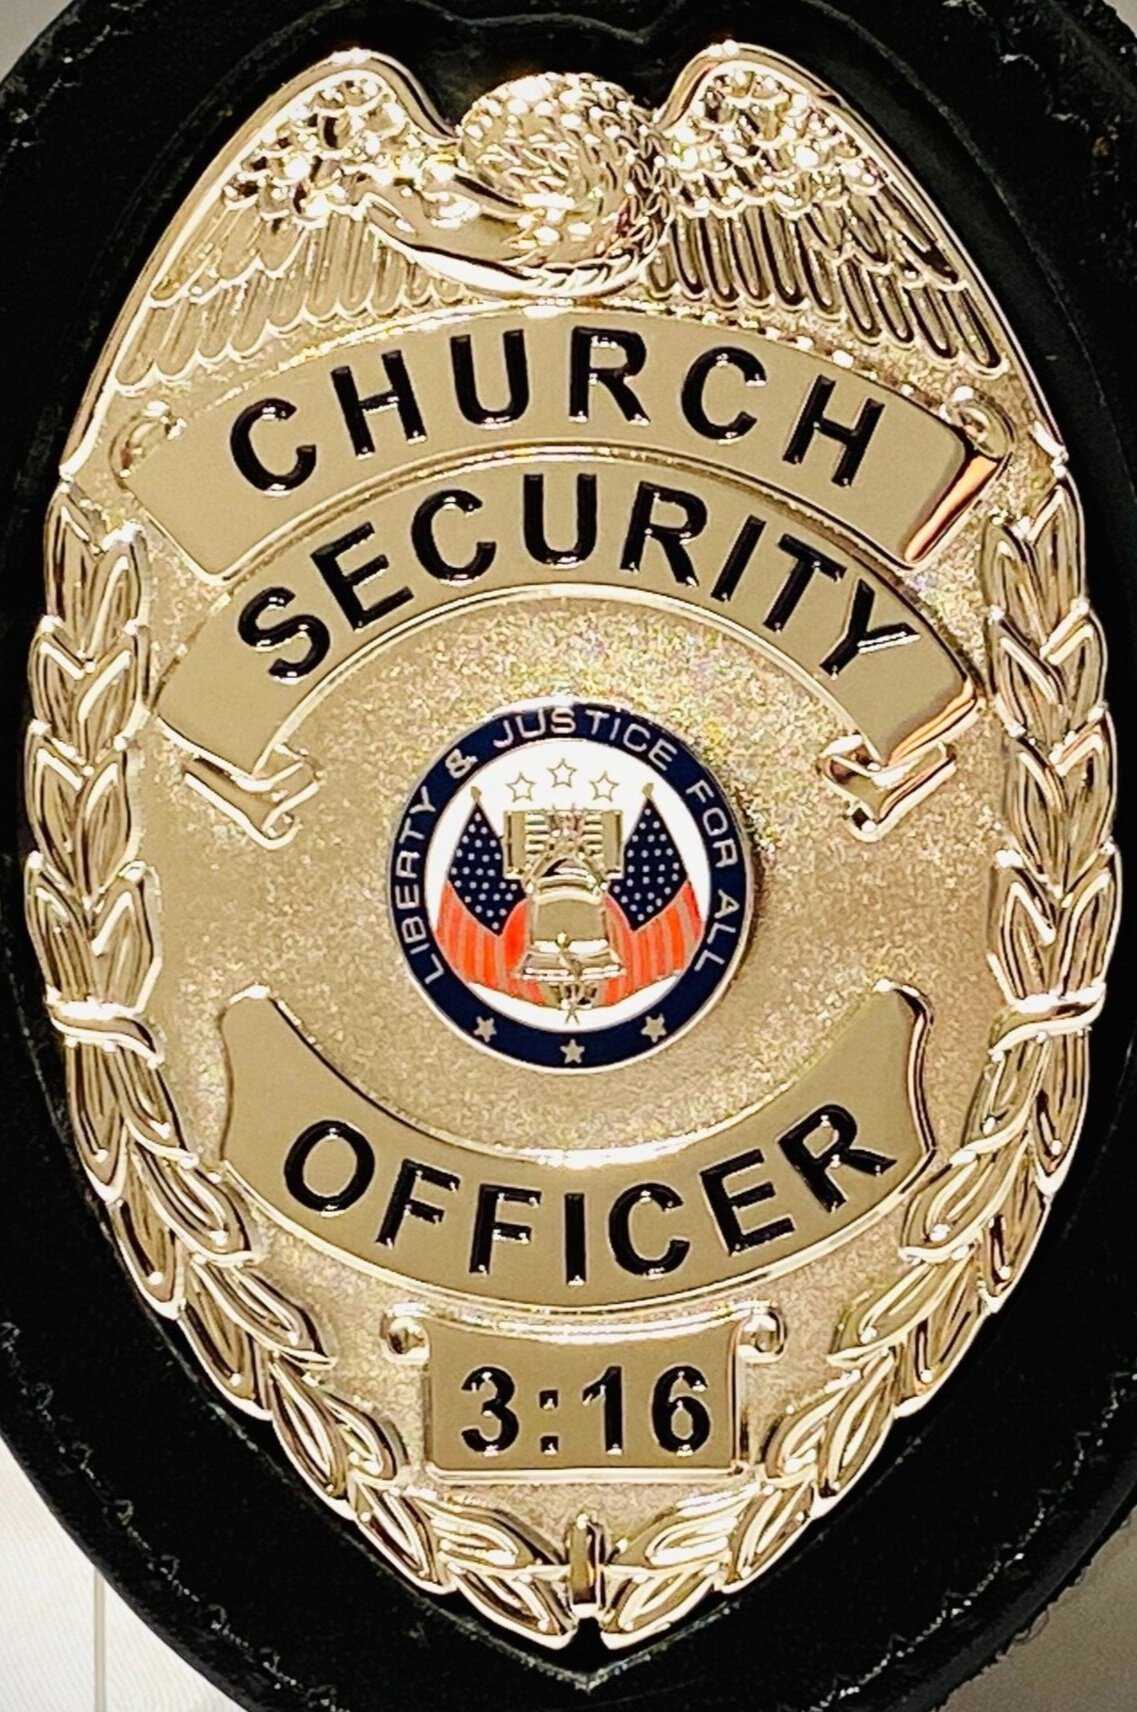 Church Security Badge